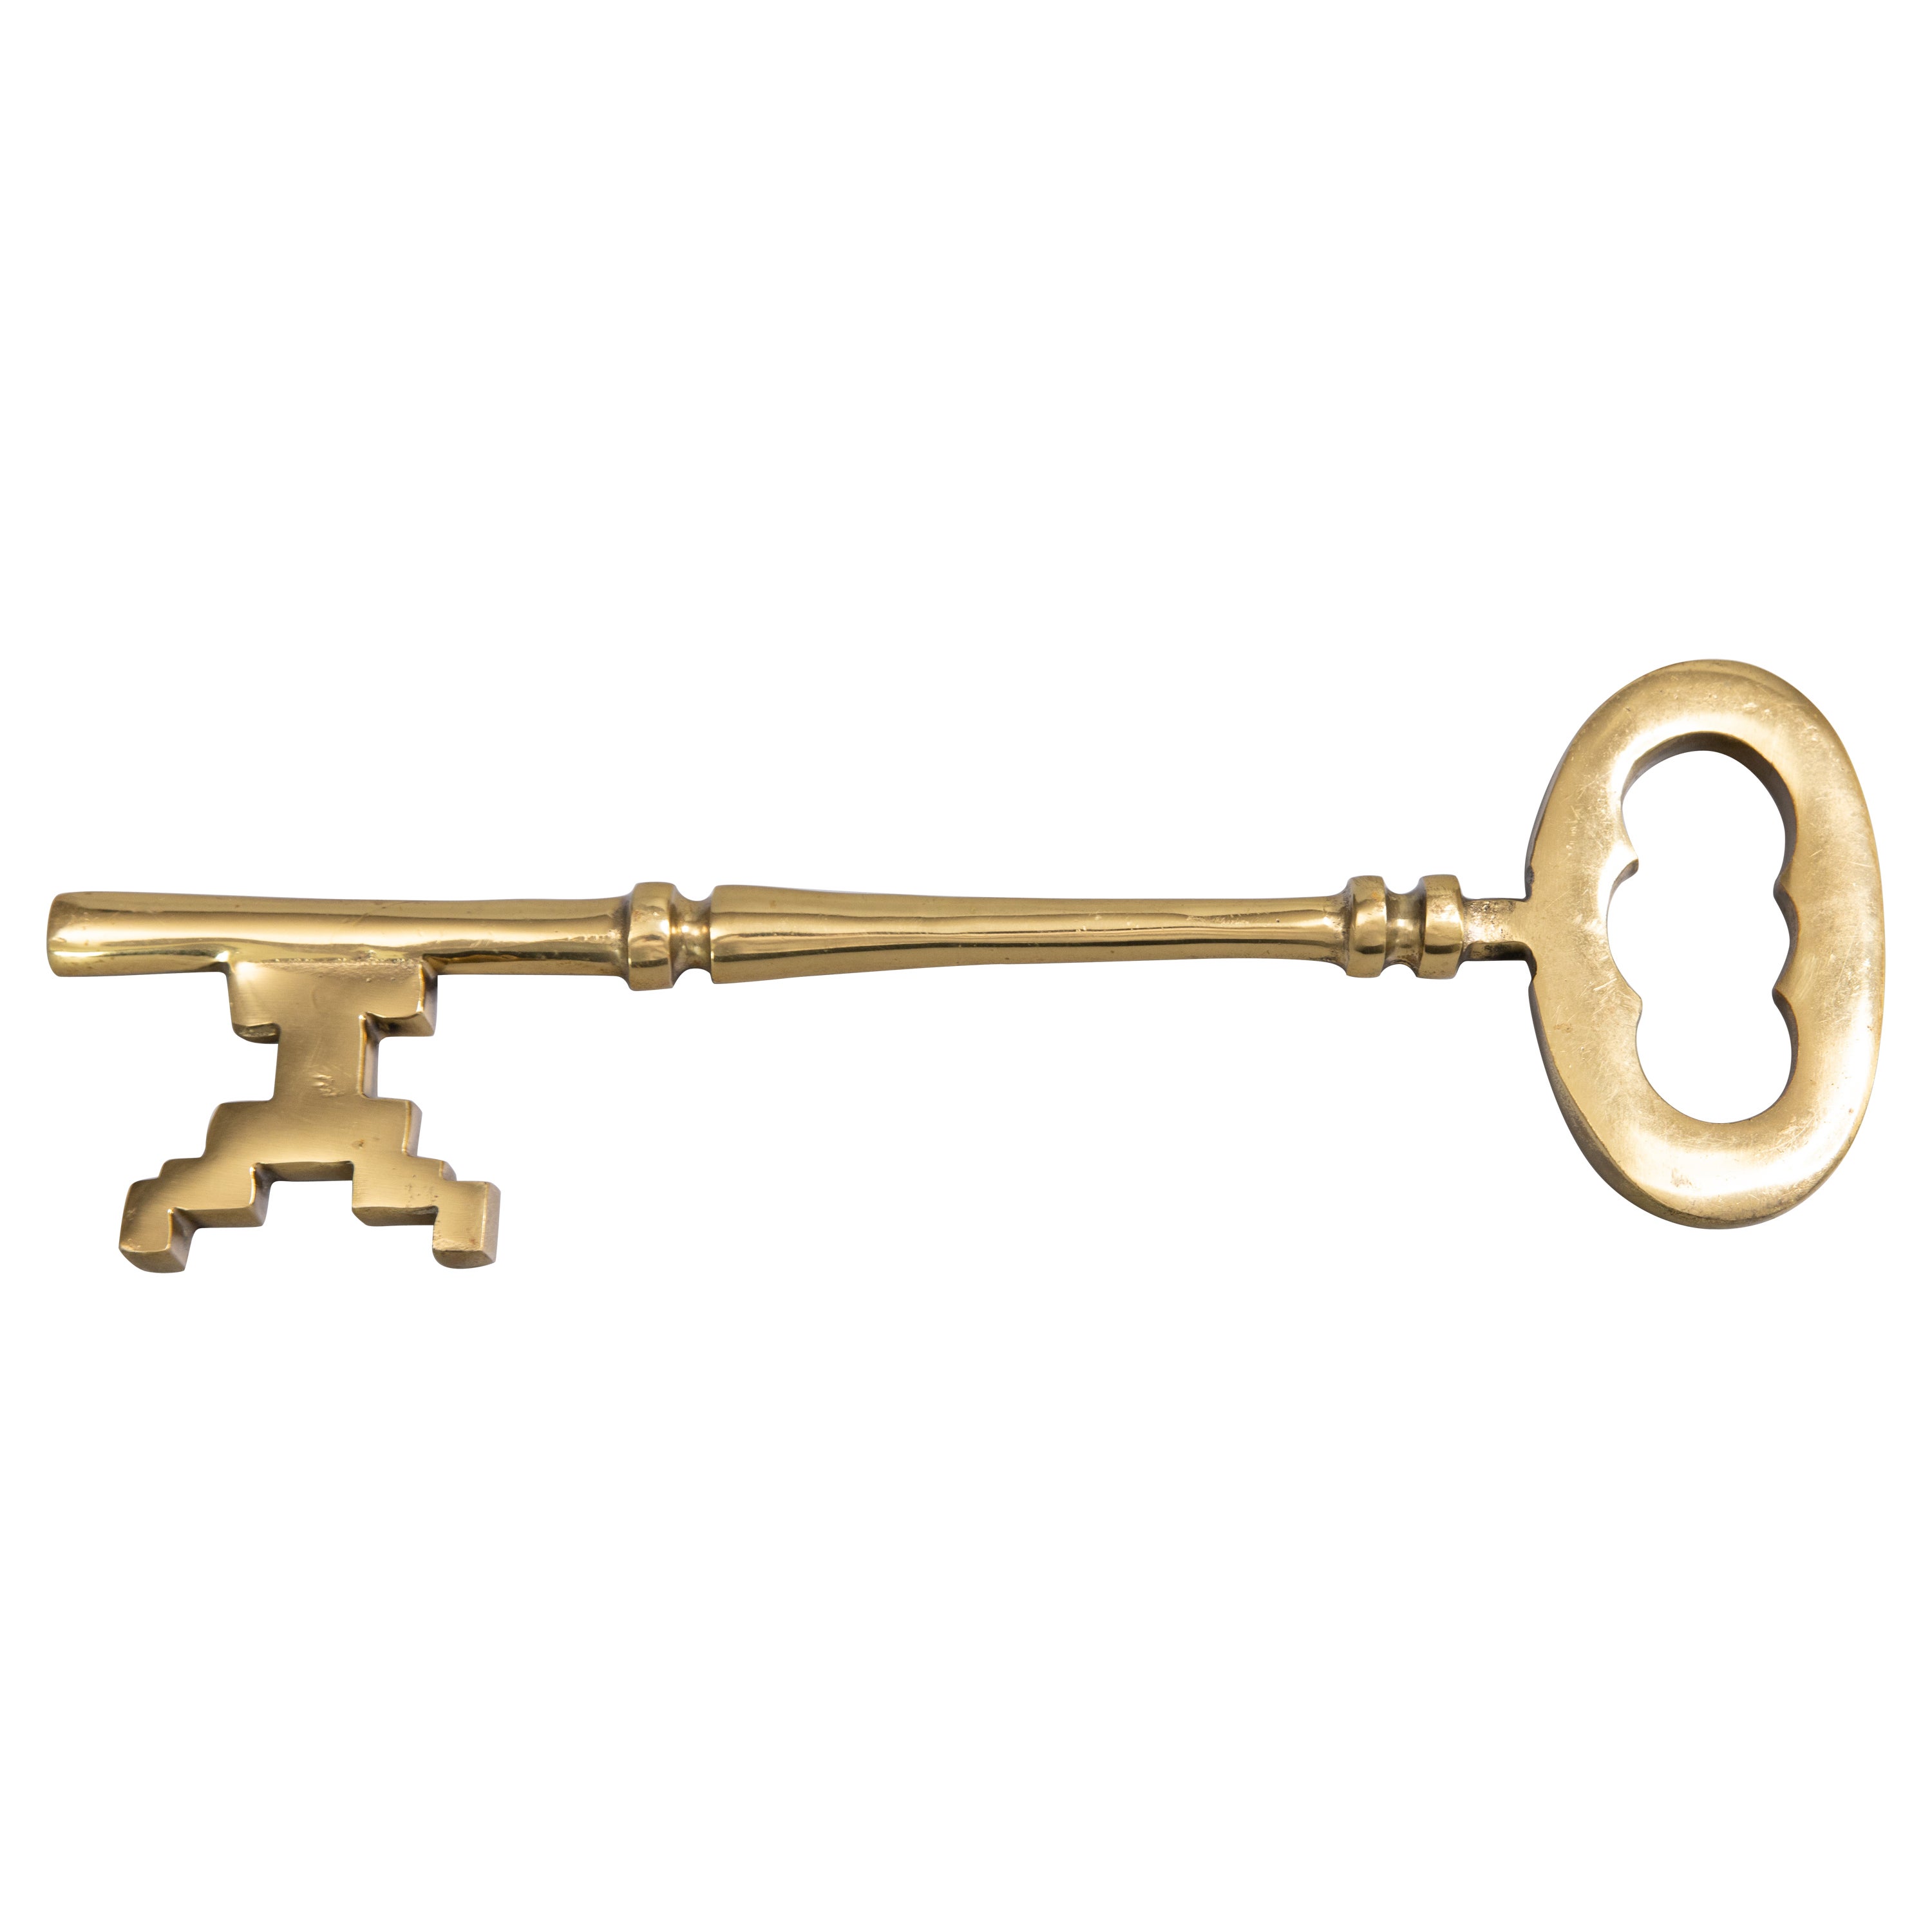 Mid-20th Century English Brass Oversized Key Objet d'Art